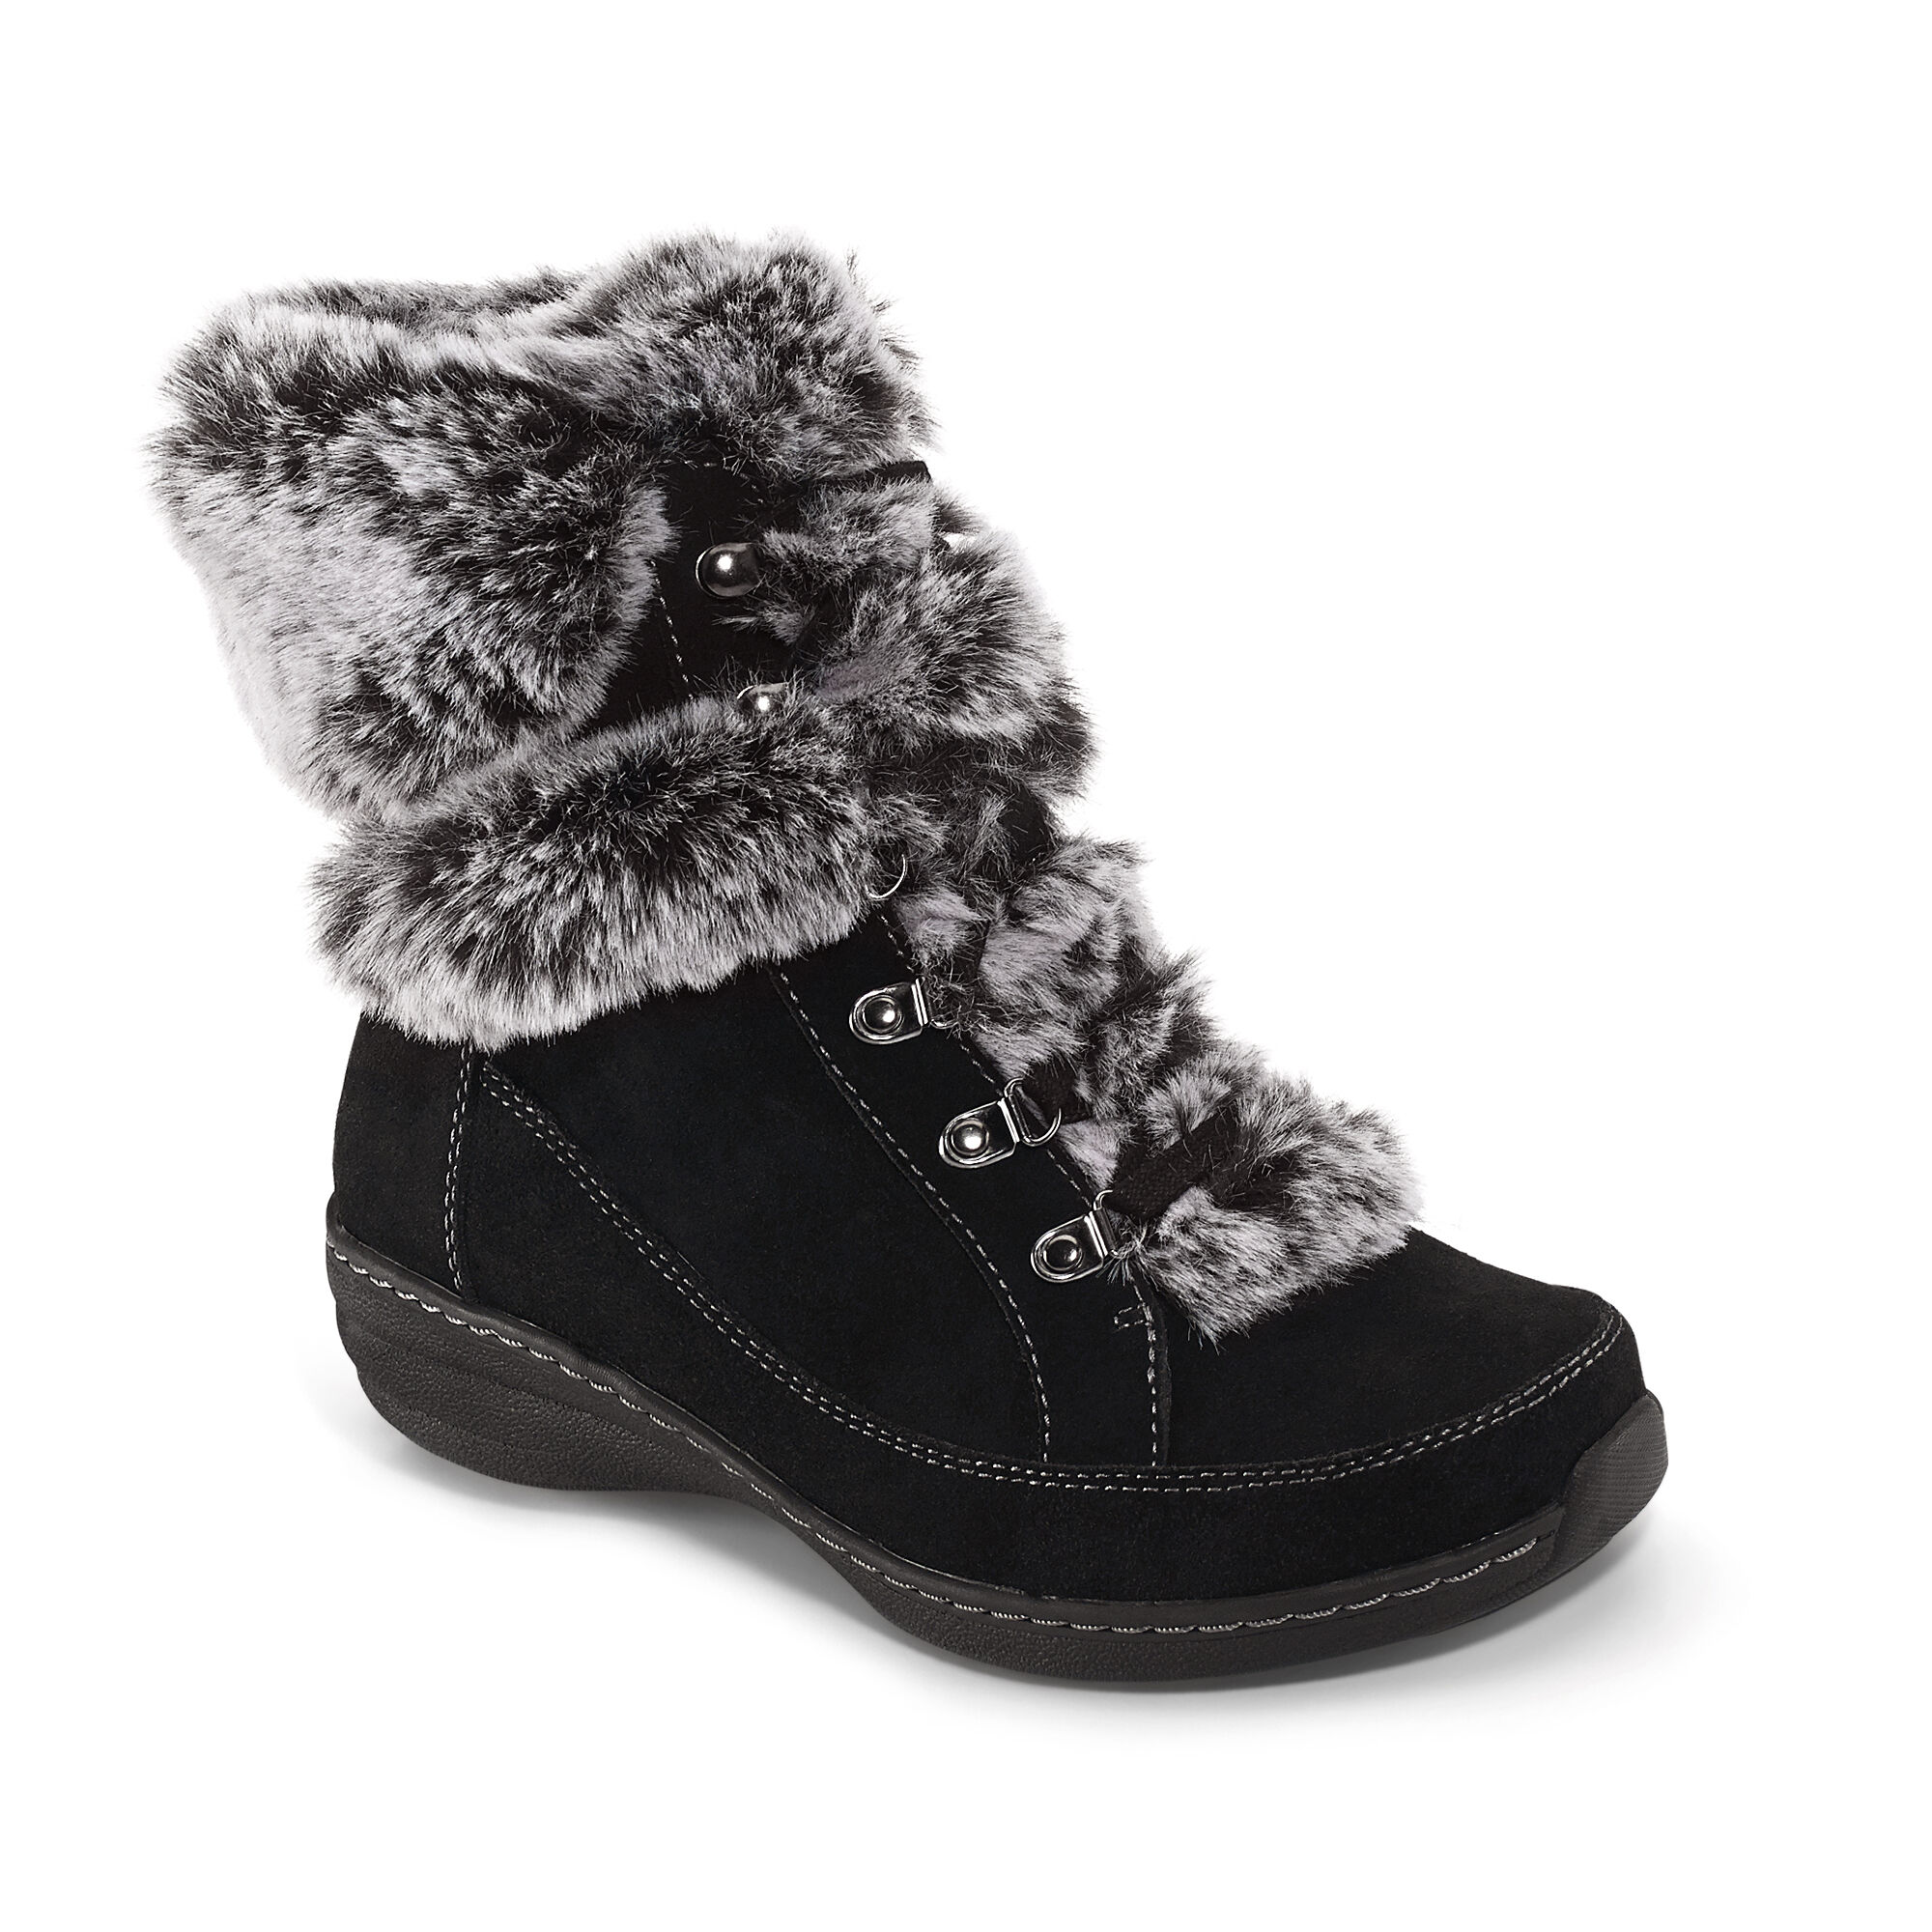 aetrex winter boots